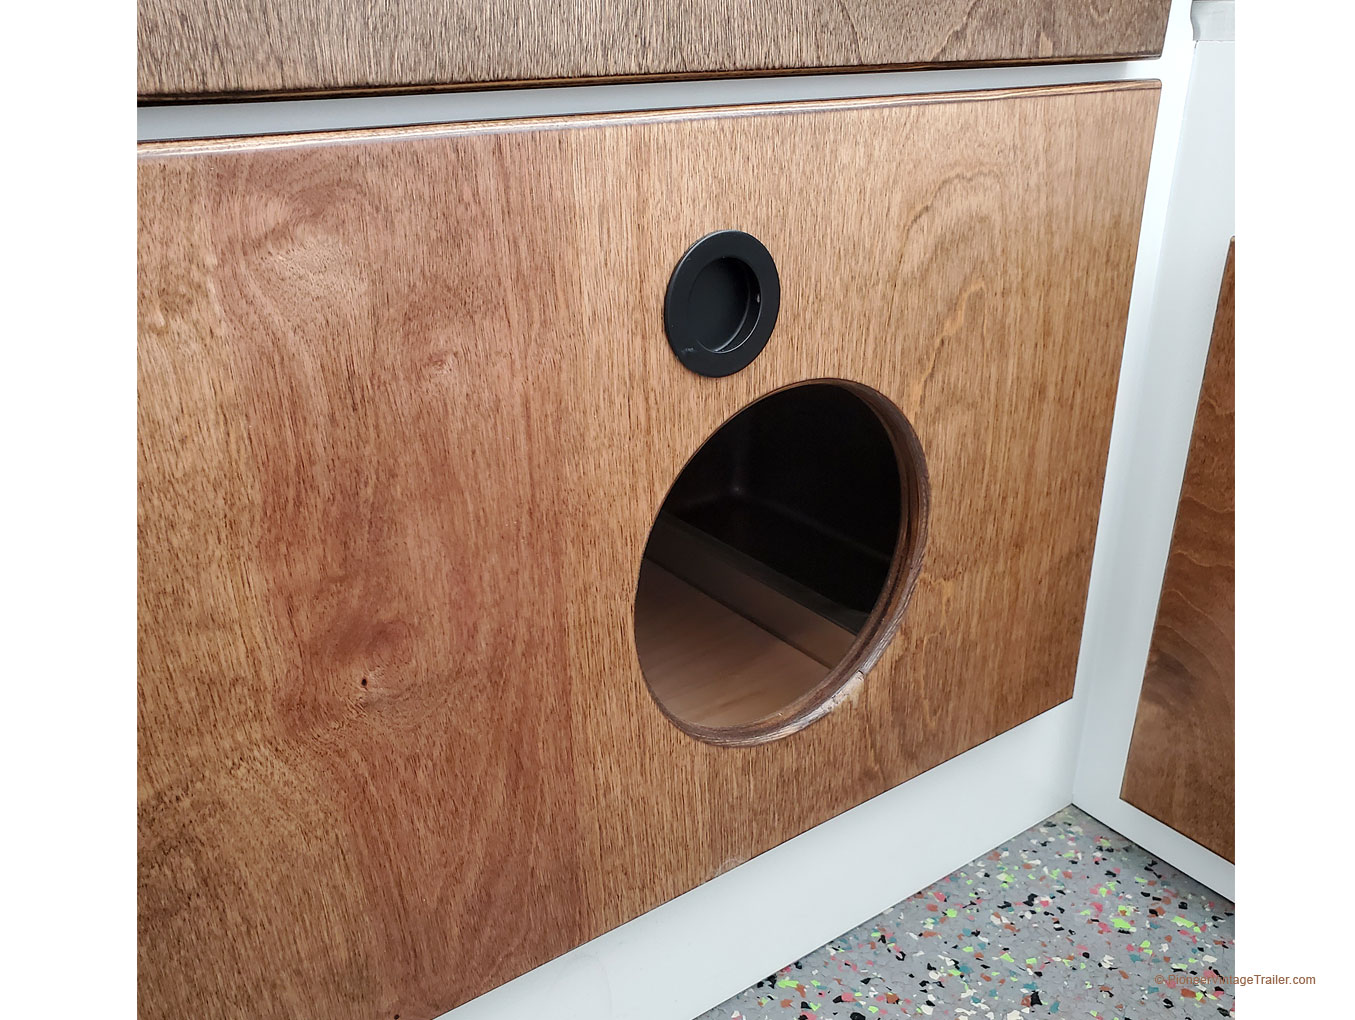 1969 Airstream Overlander cat litterbox access hole